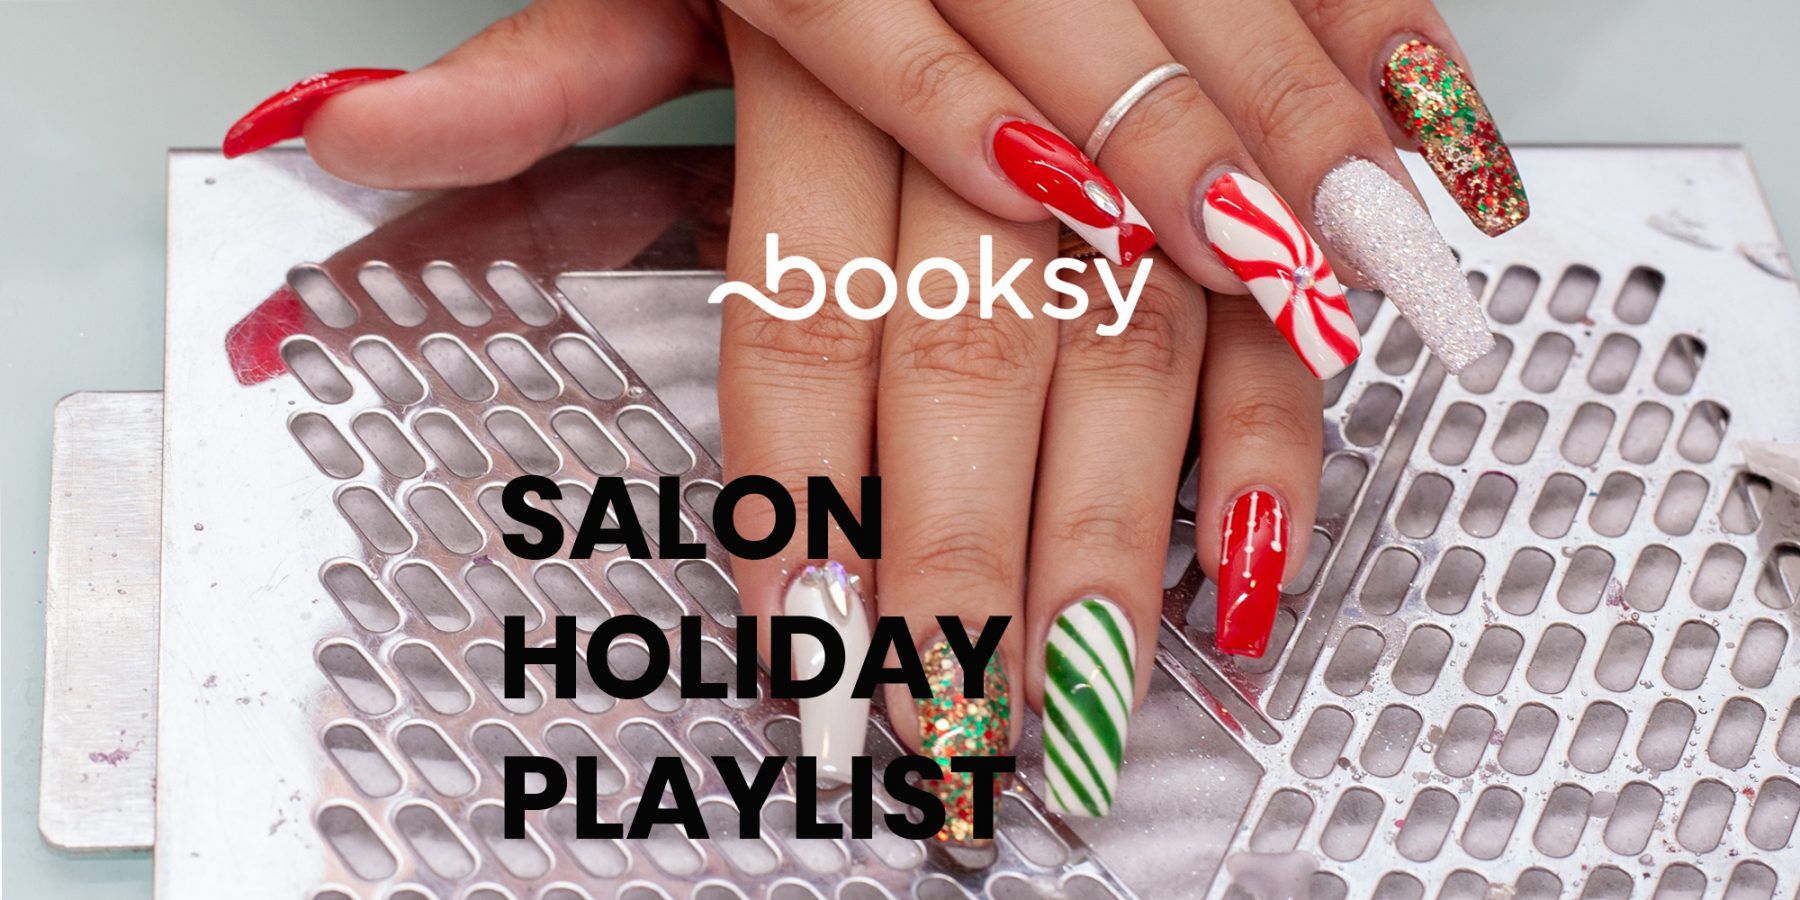 Booksy's Salon Holiday Playlist